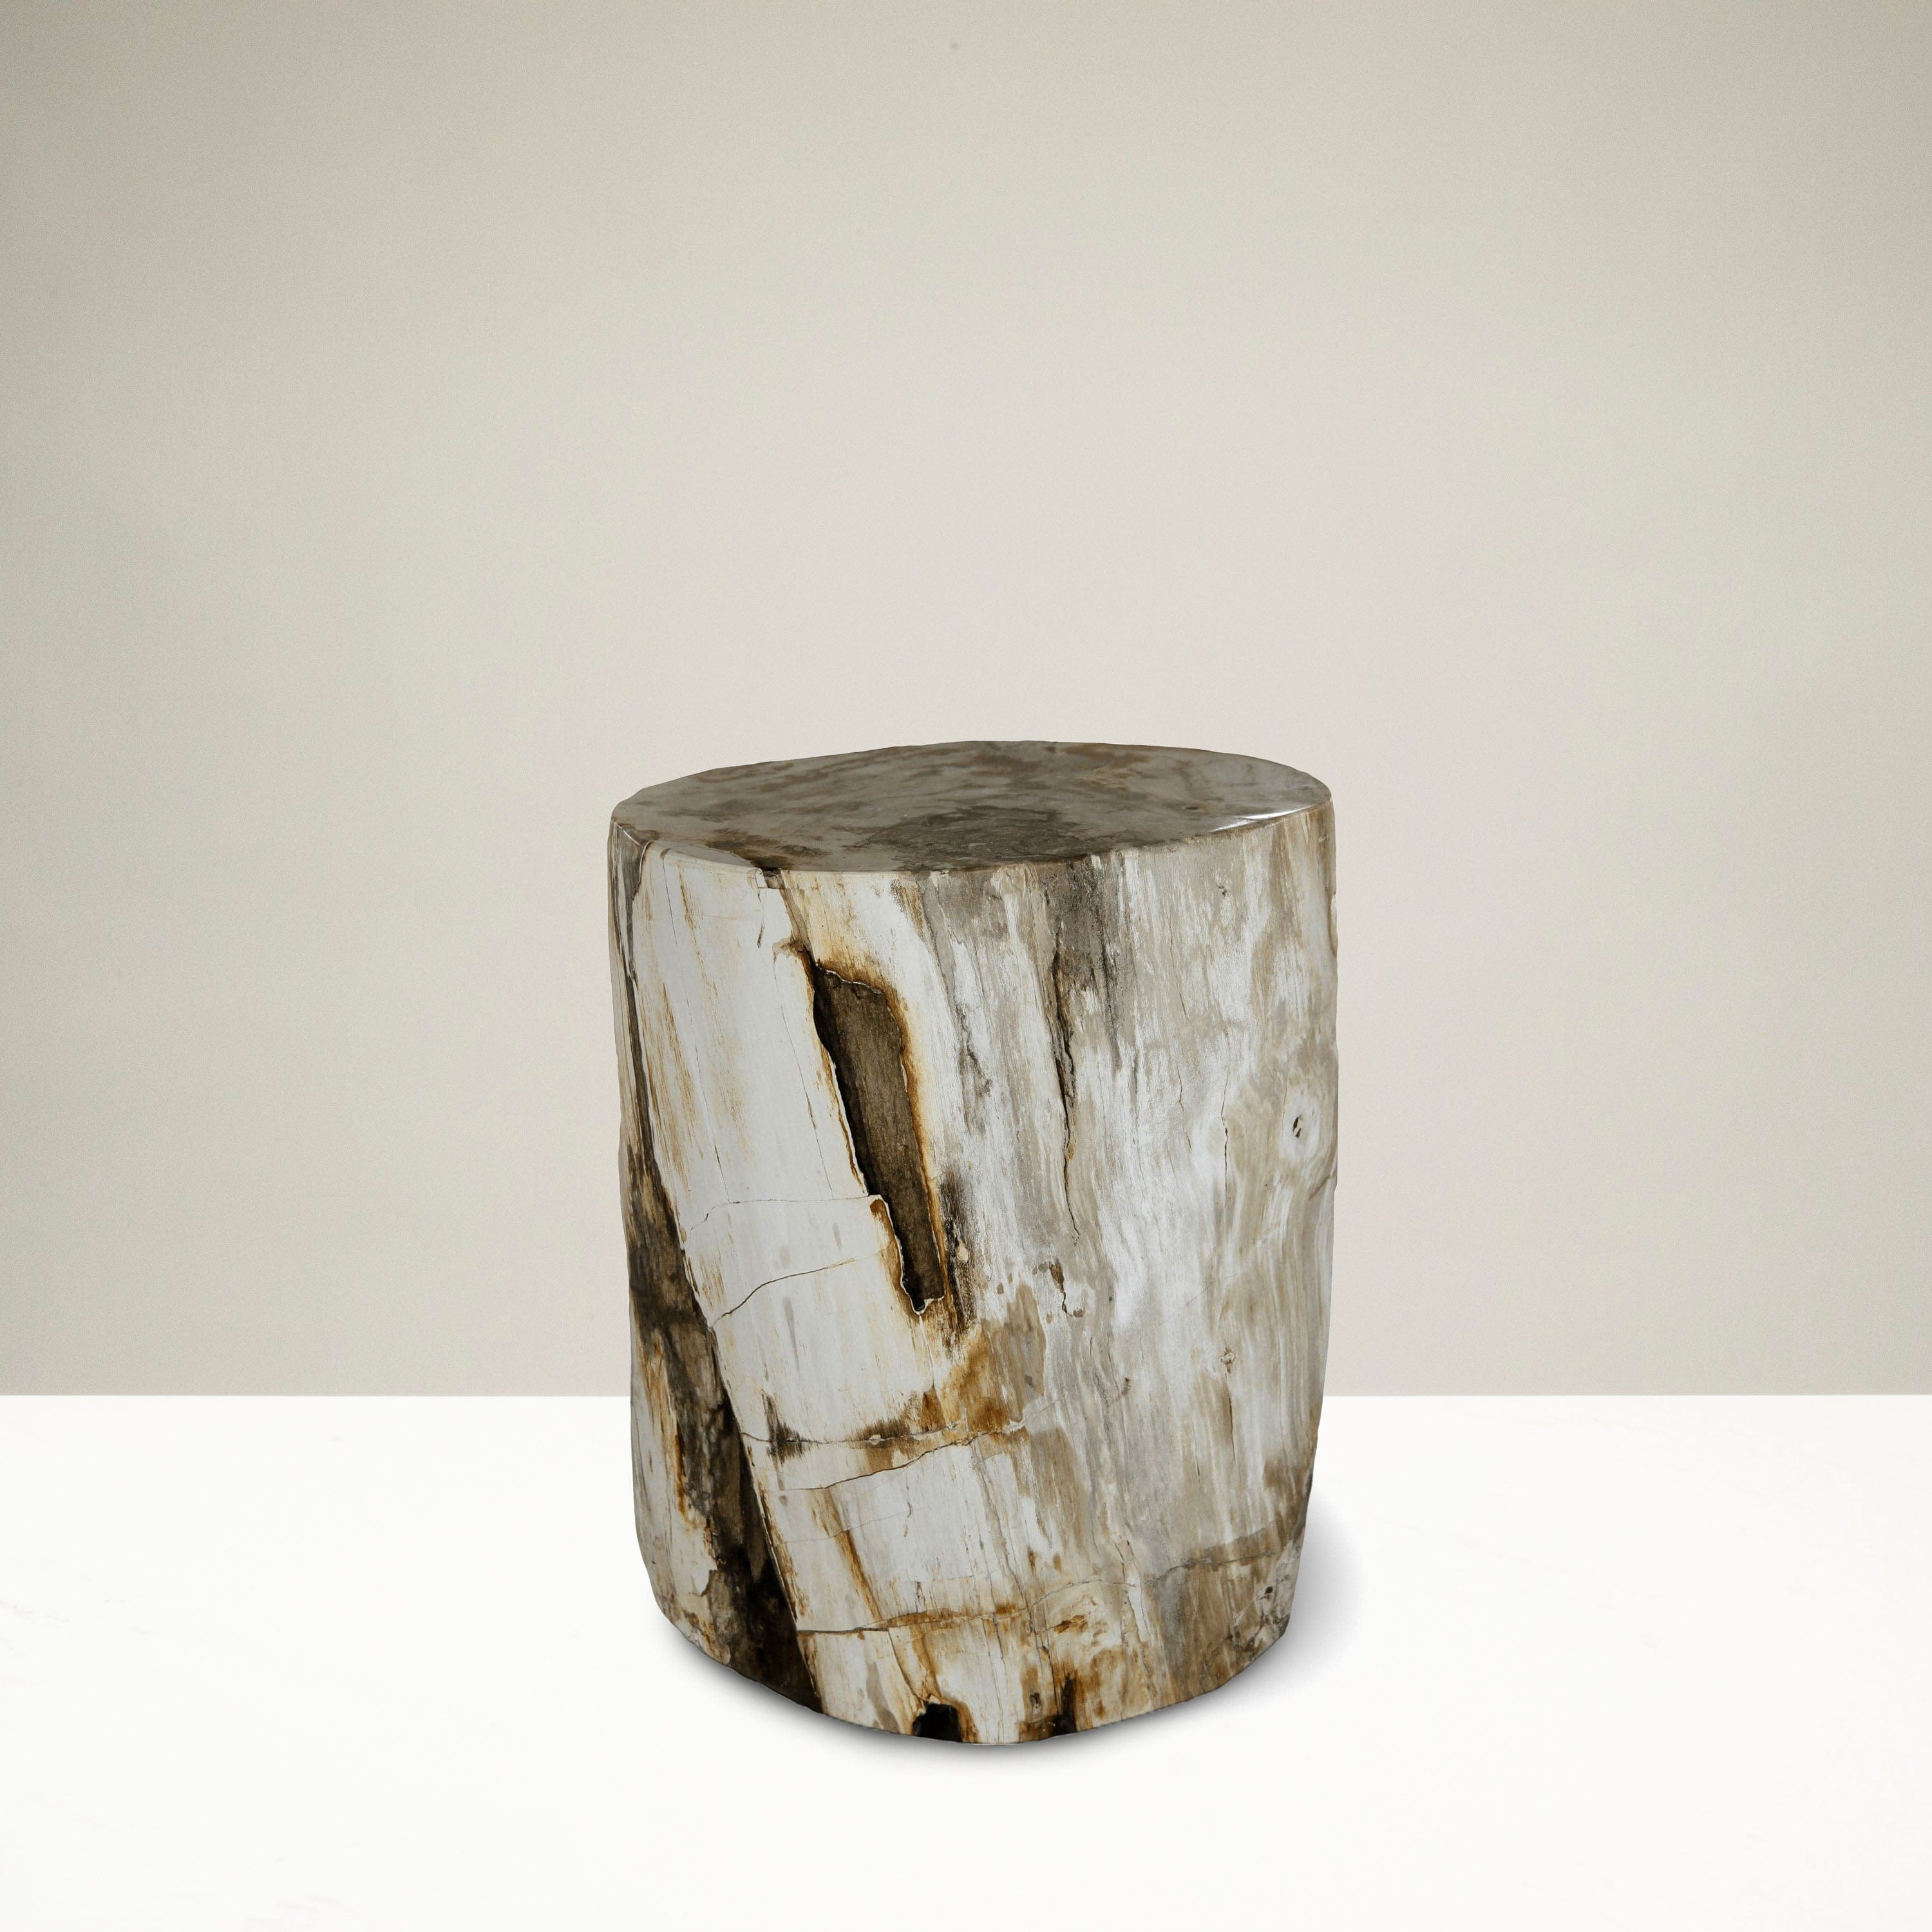 Kalifano Petrified Wood Petrified Wood Round Stump / Stool from Indonesia - 18" / 209 lbs PWS3800.003